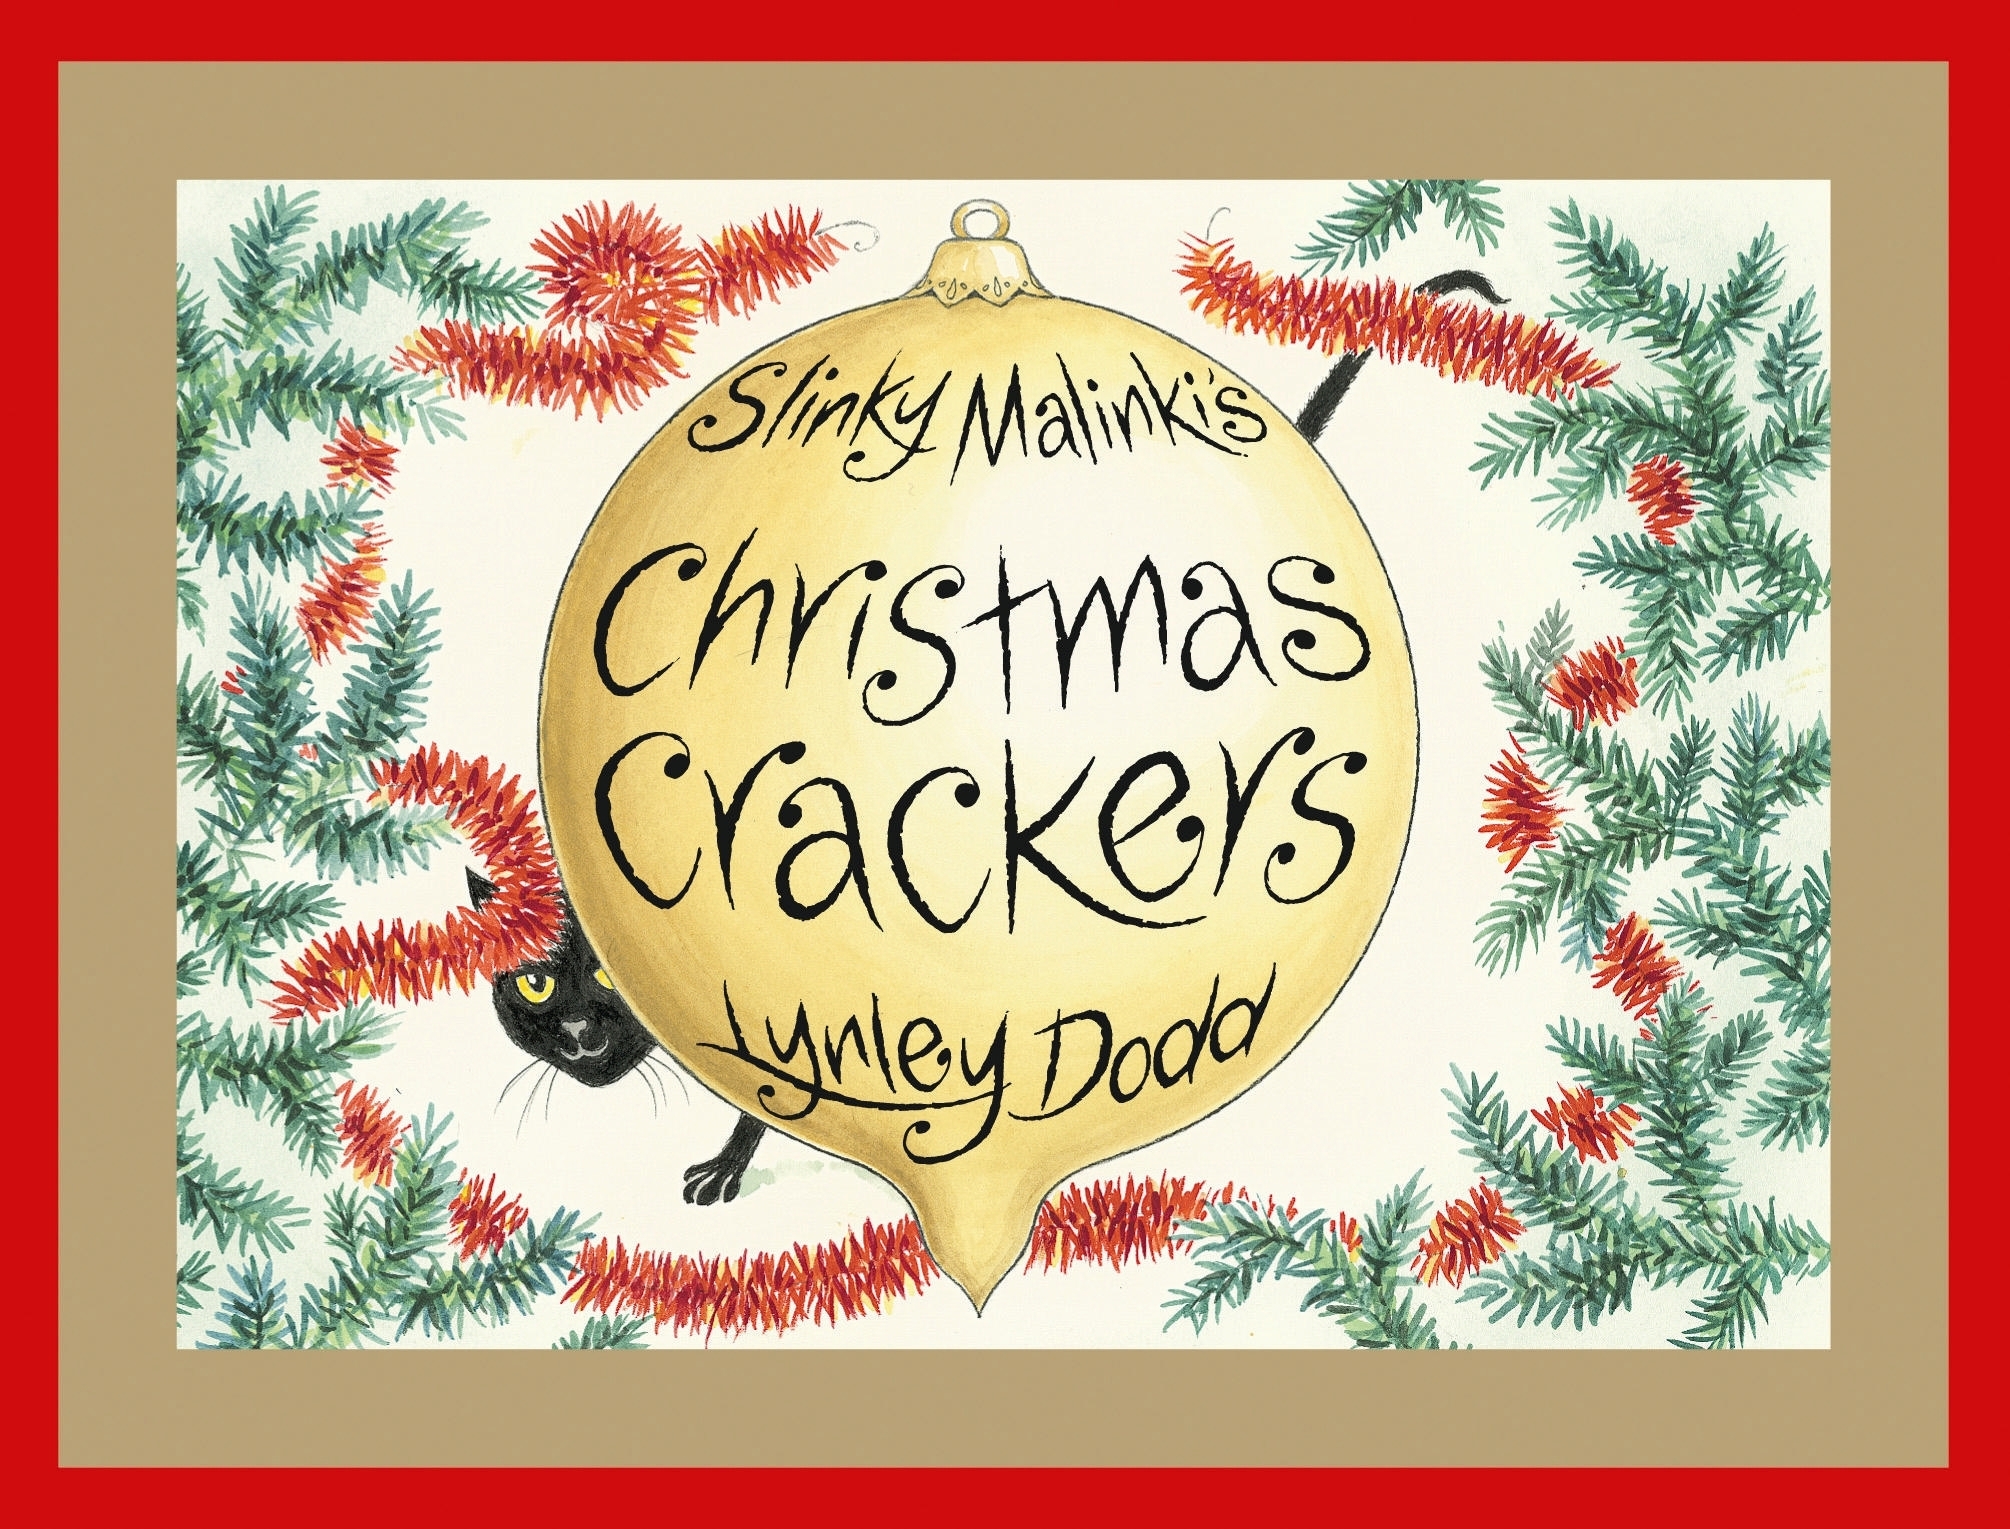 Slinky Malinki's Christmas crackers book cover.